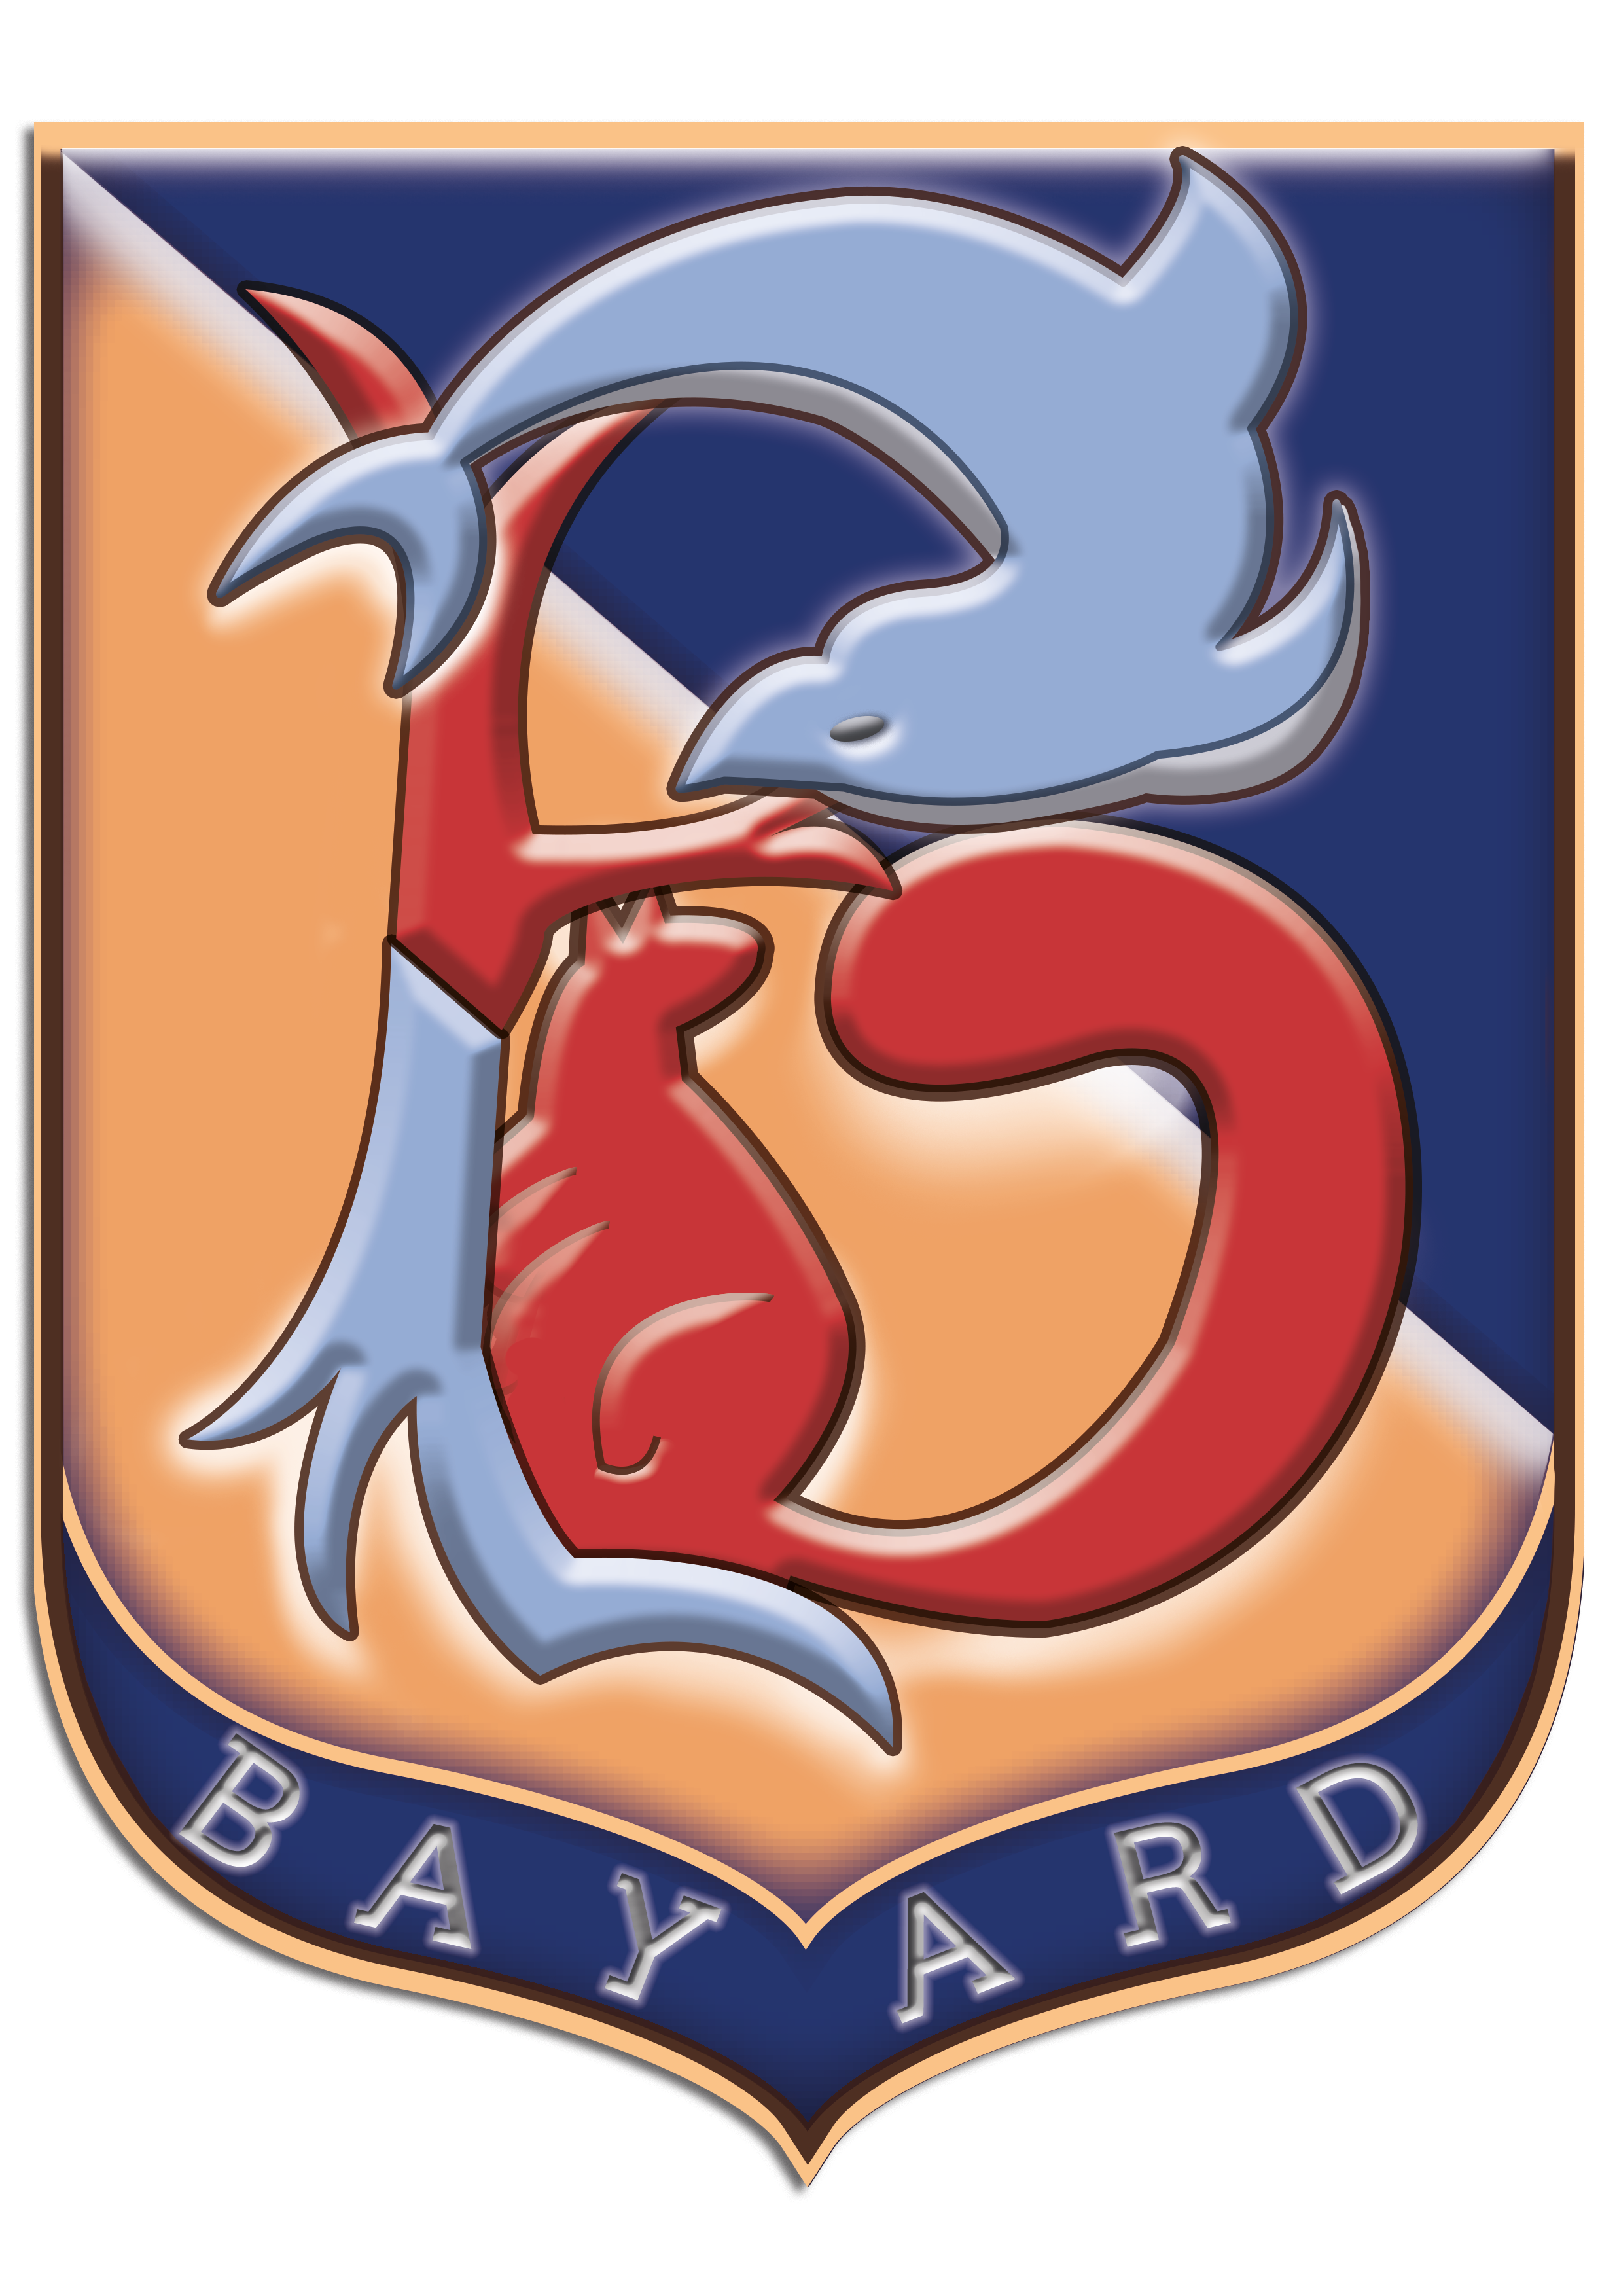 Logo association Le Bayard 38